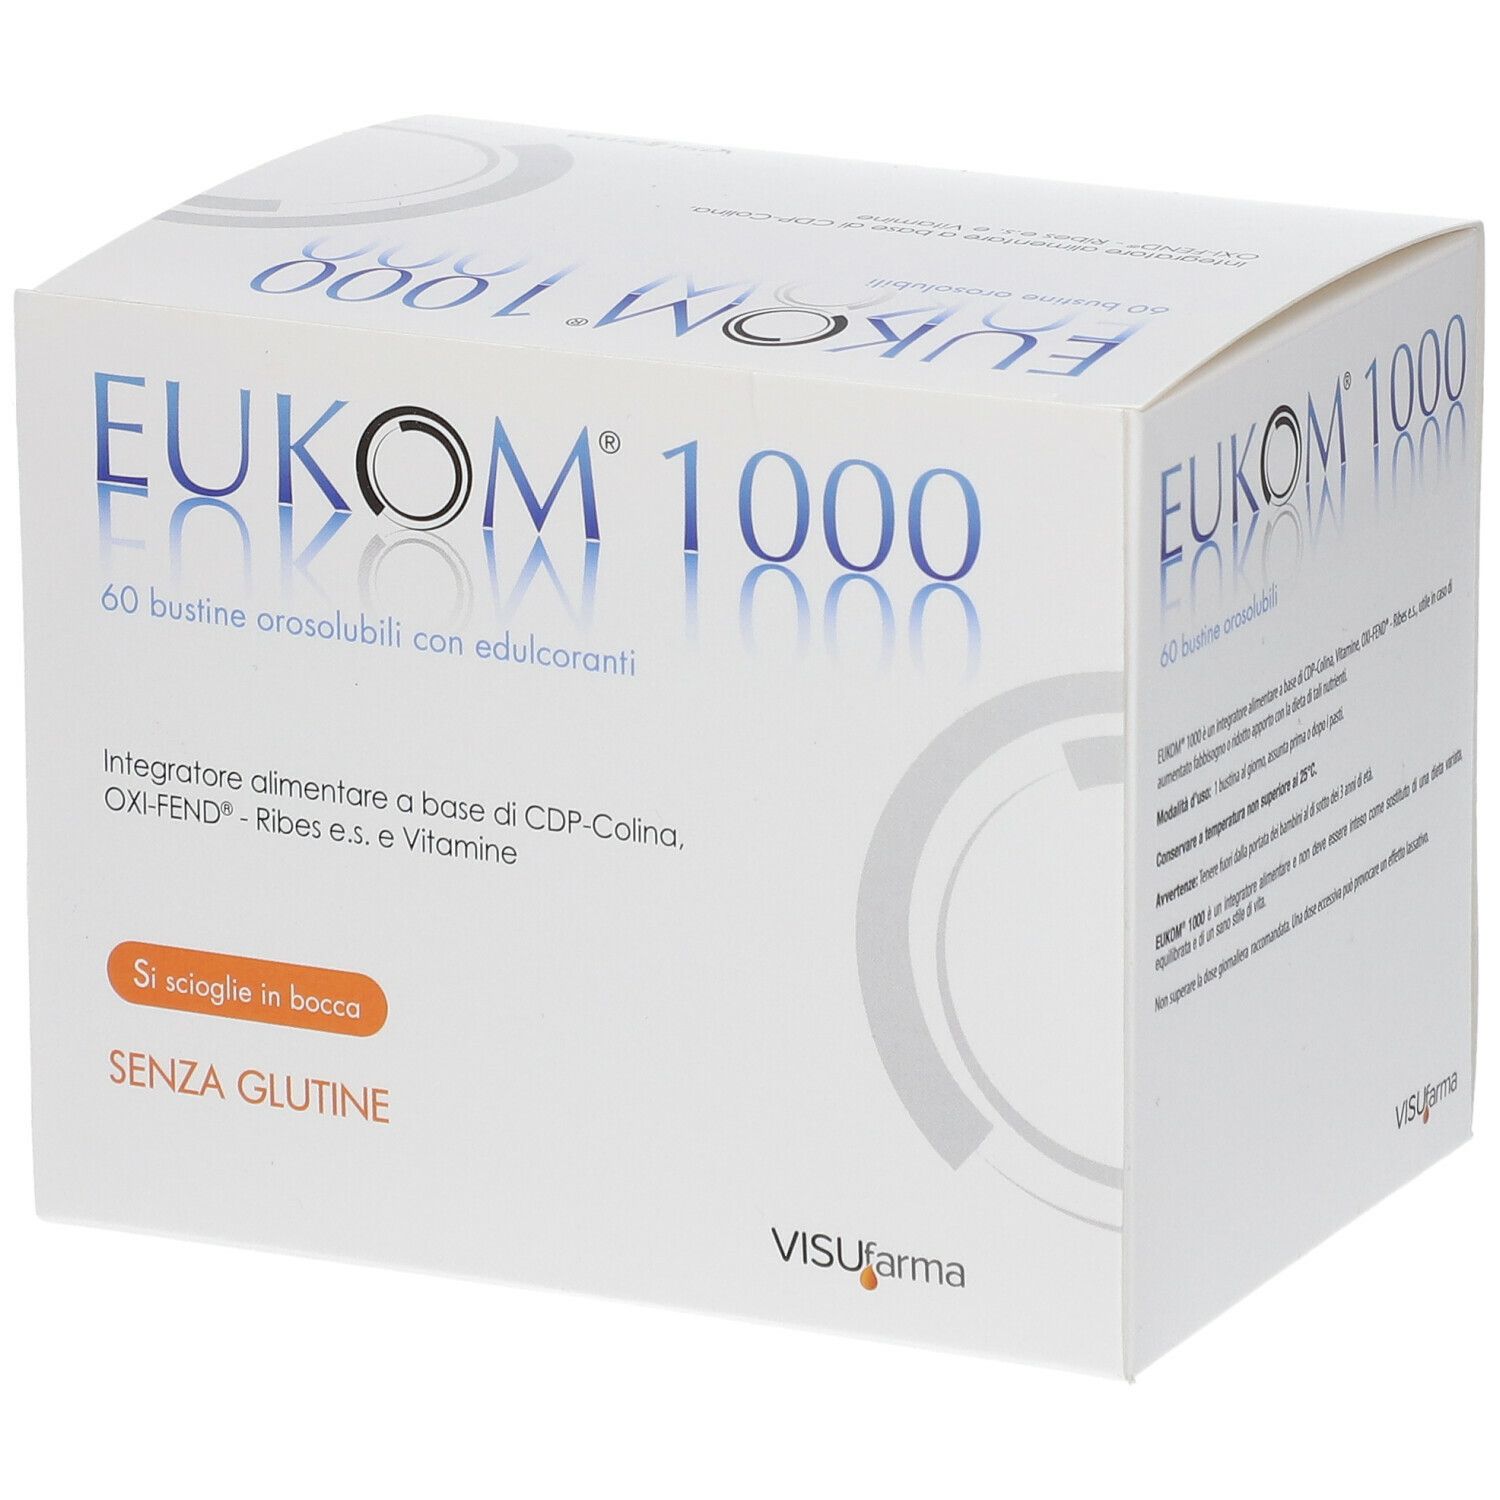 Eukom® 1000